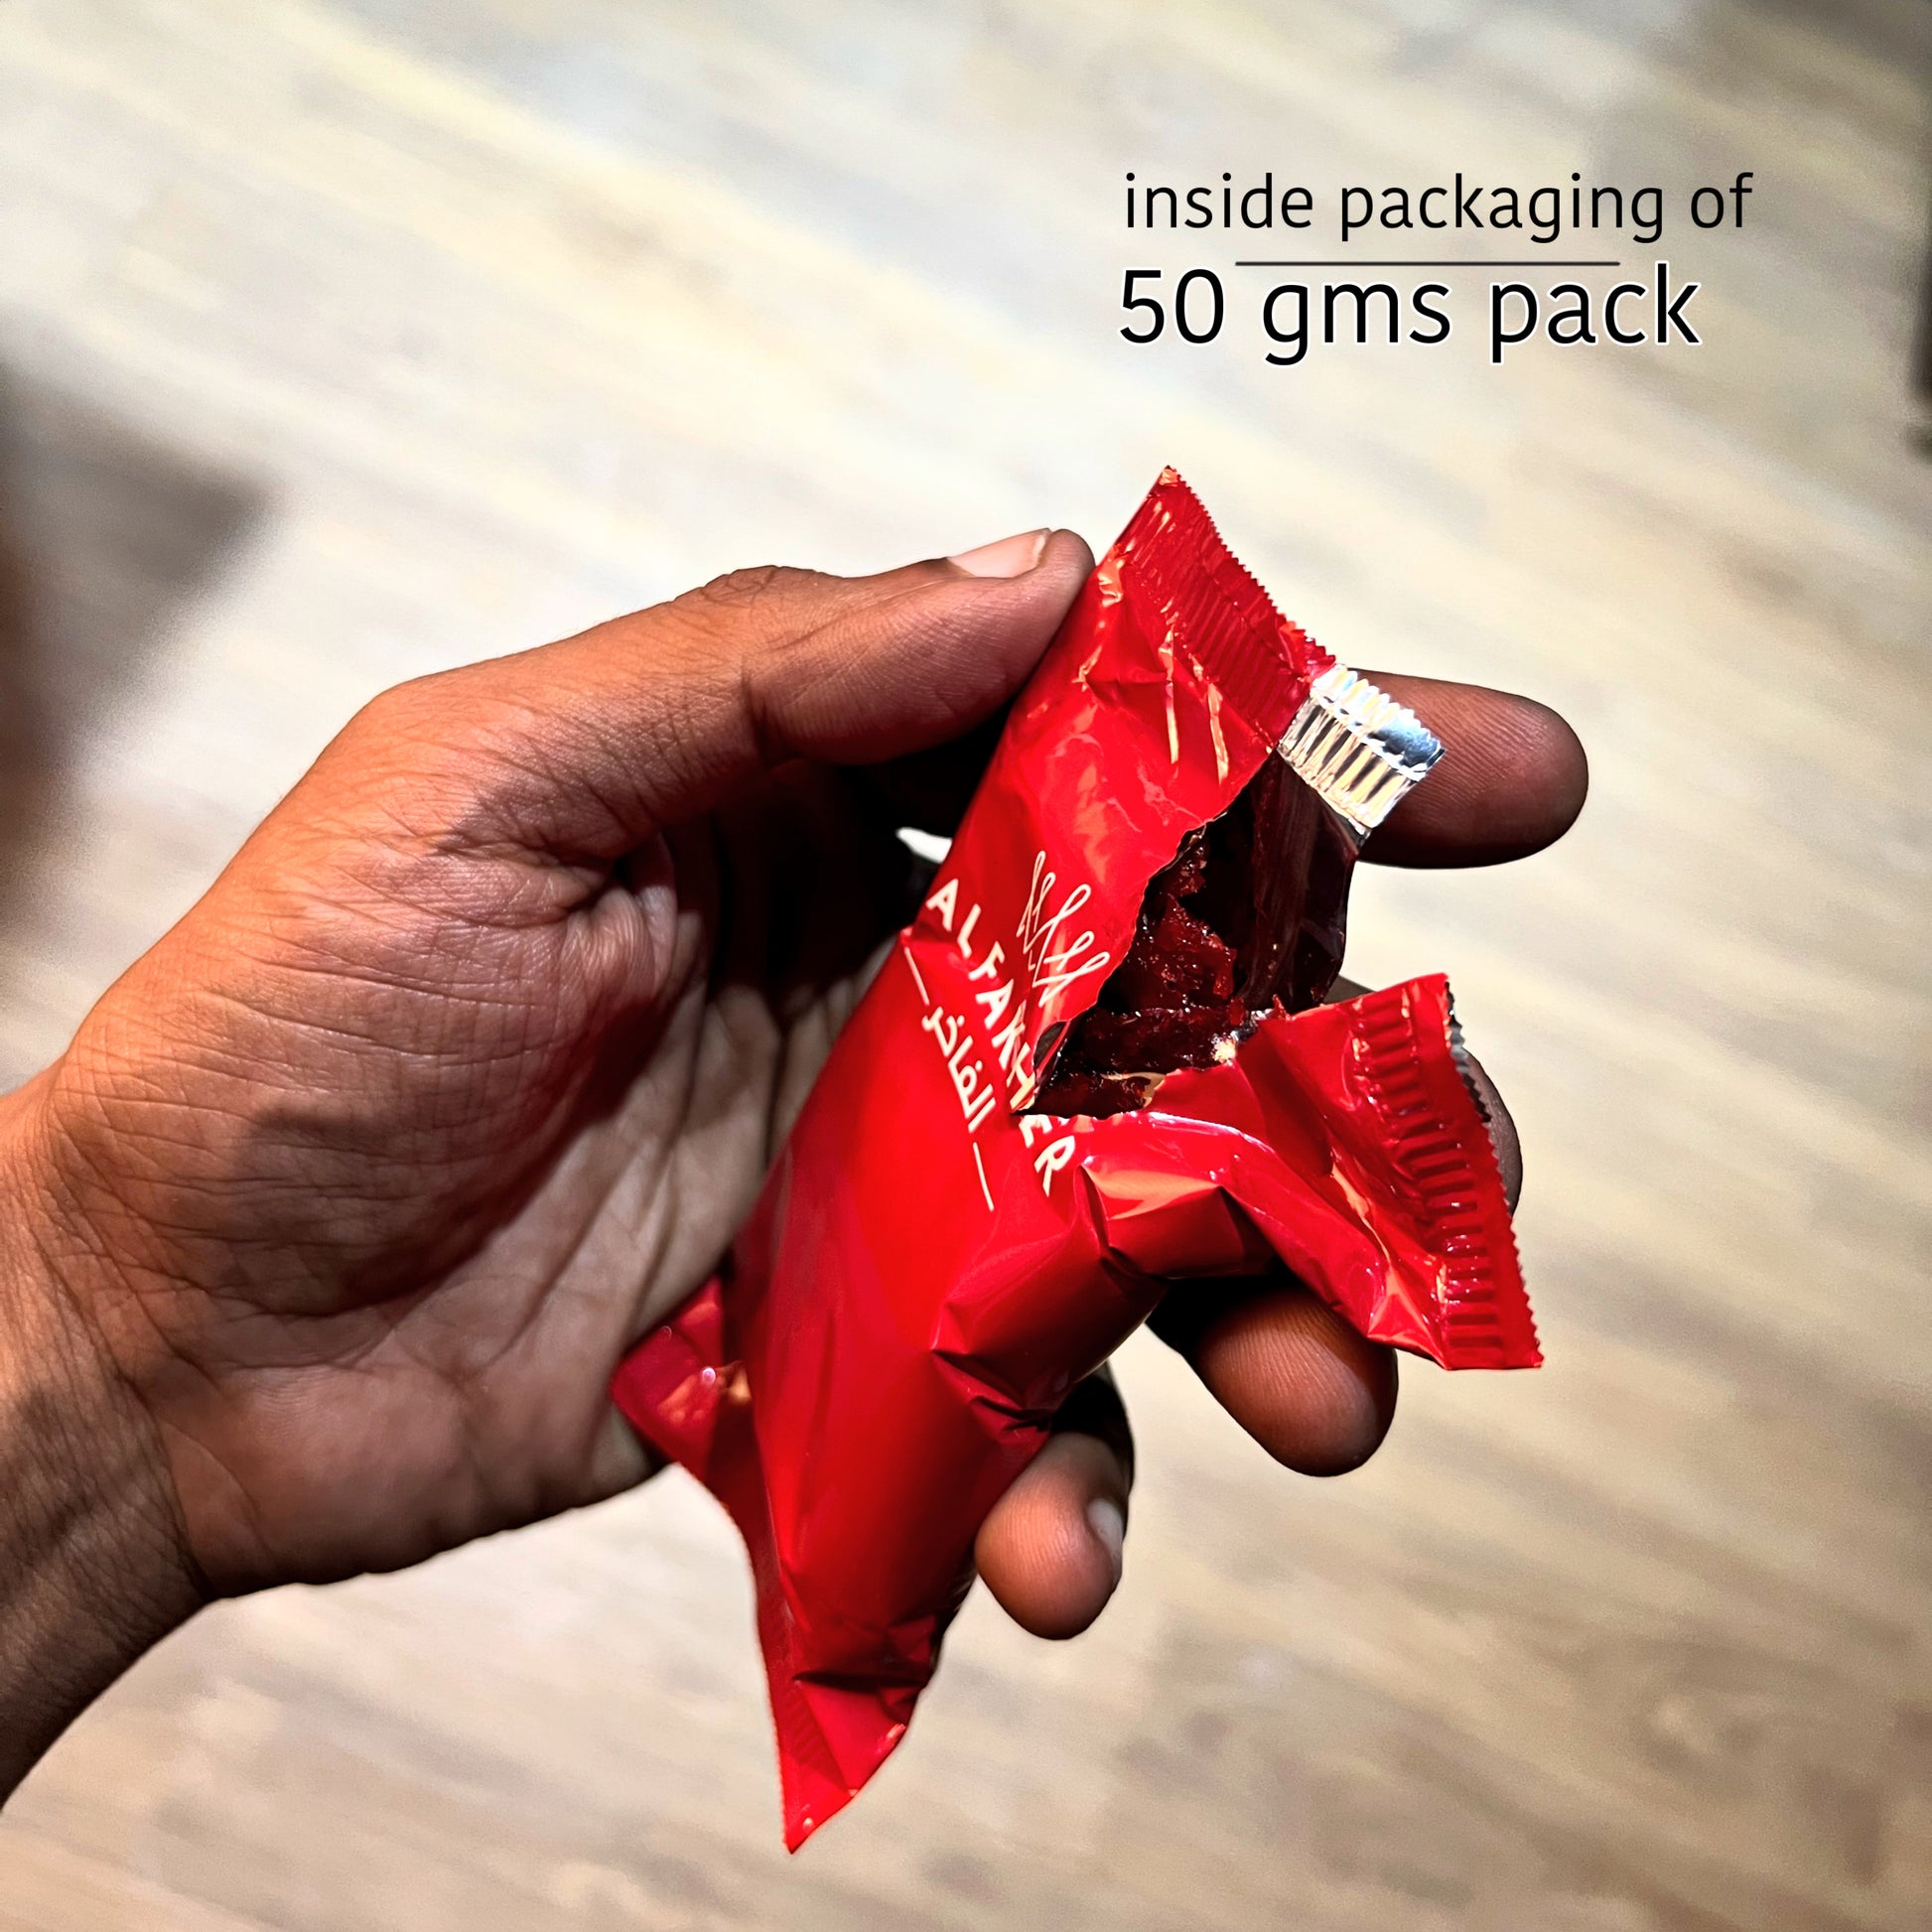 al-fakher-50-gms-pack-inside-packaging